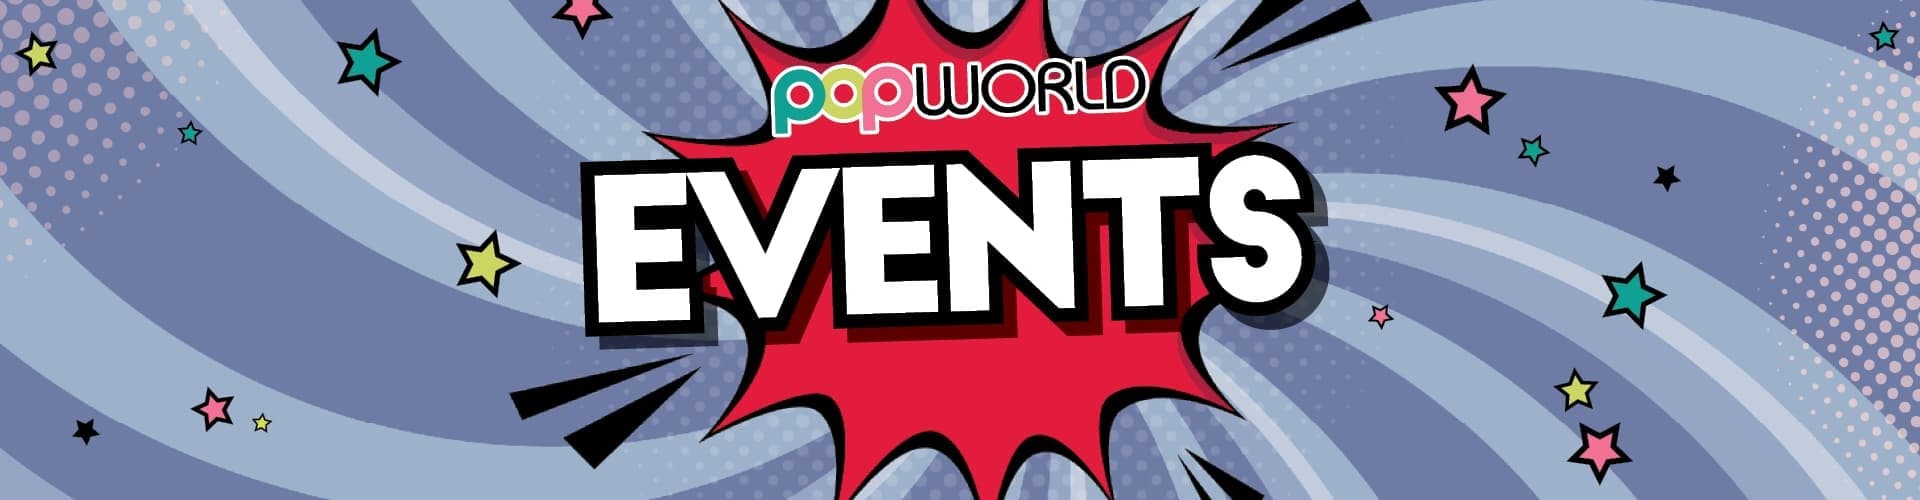 Events at Popworld Sheffield